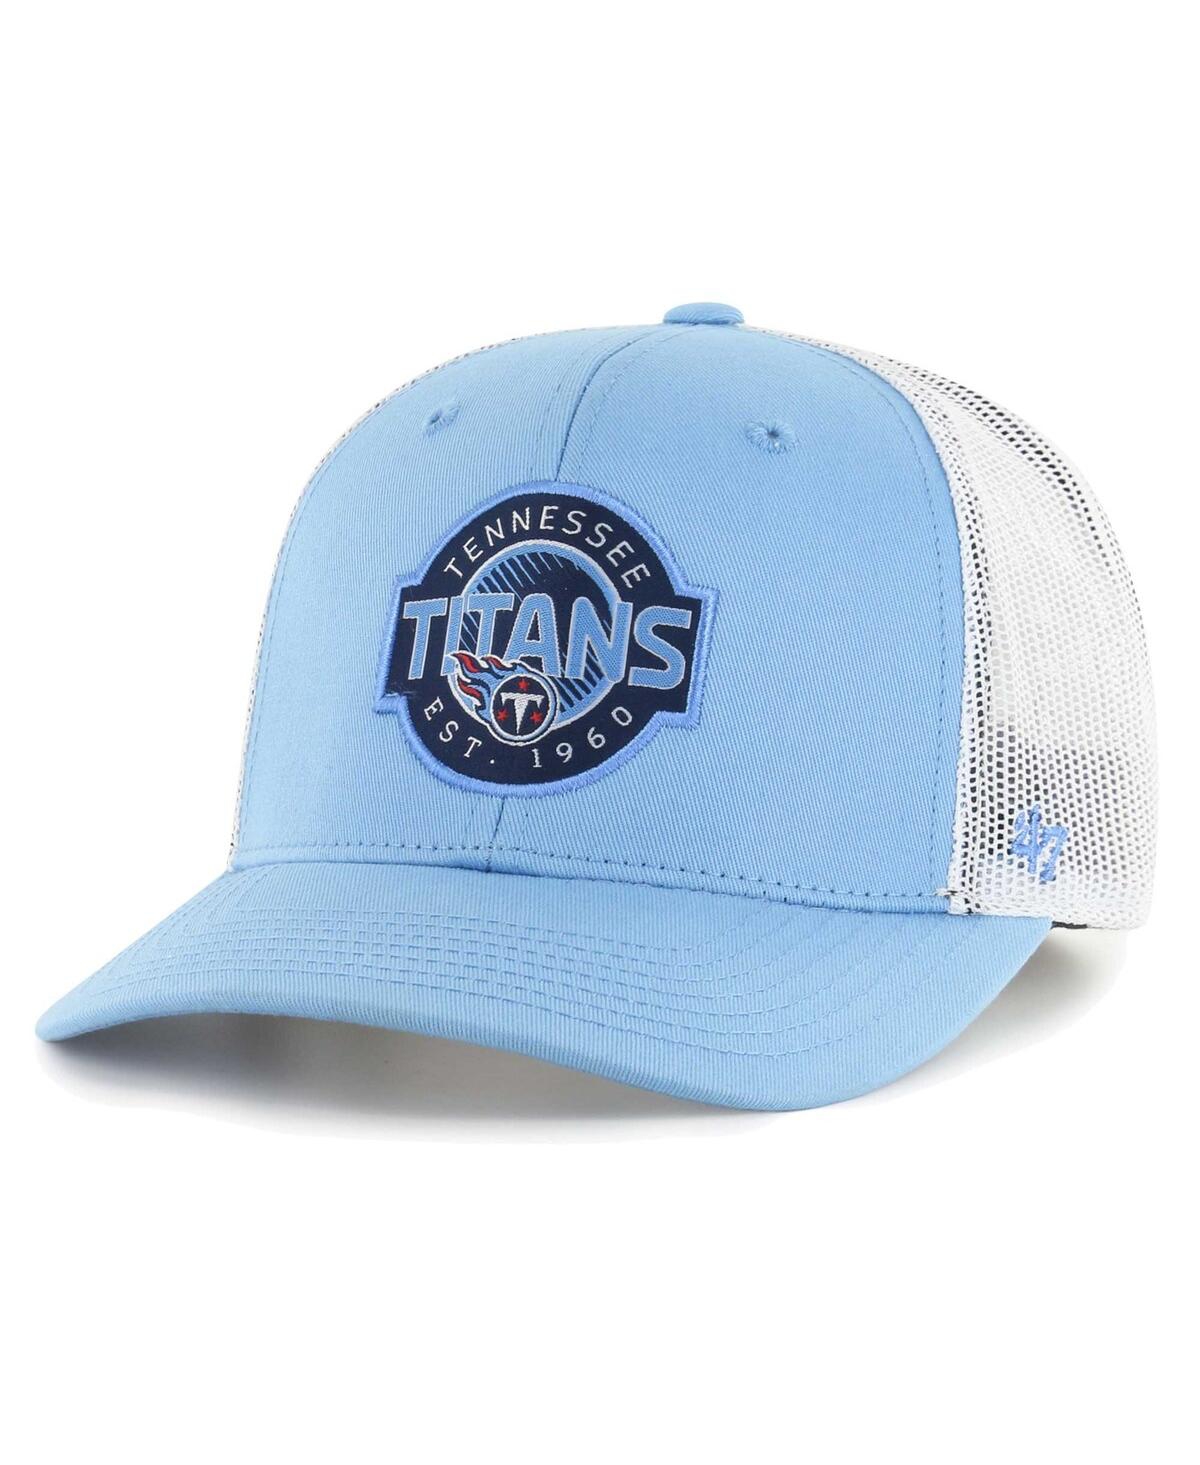 47 Brand Youth Light Blue/White Tennessee Titans Scramble Adjustable Trucker Hat - Light Blue